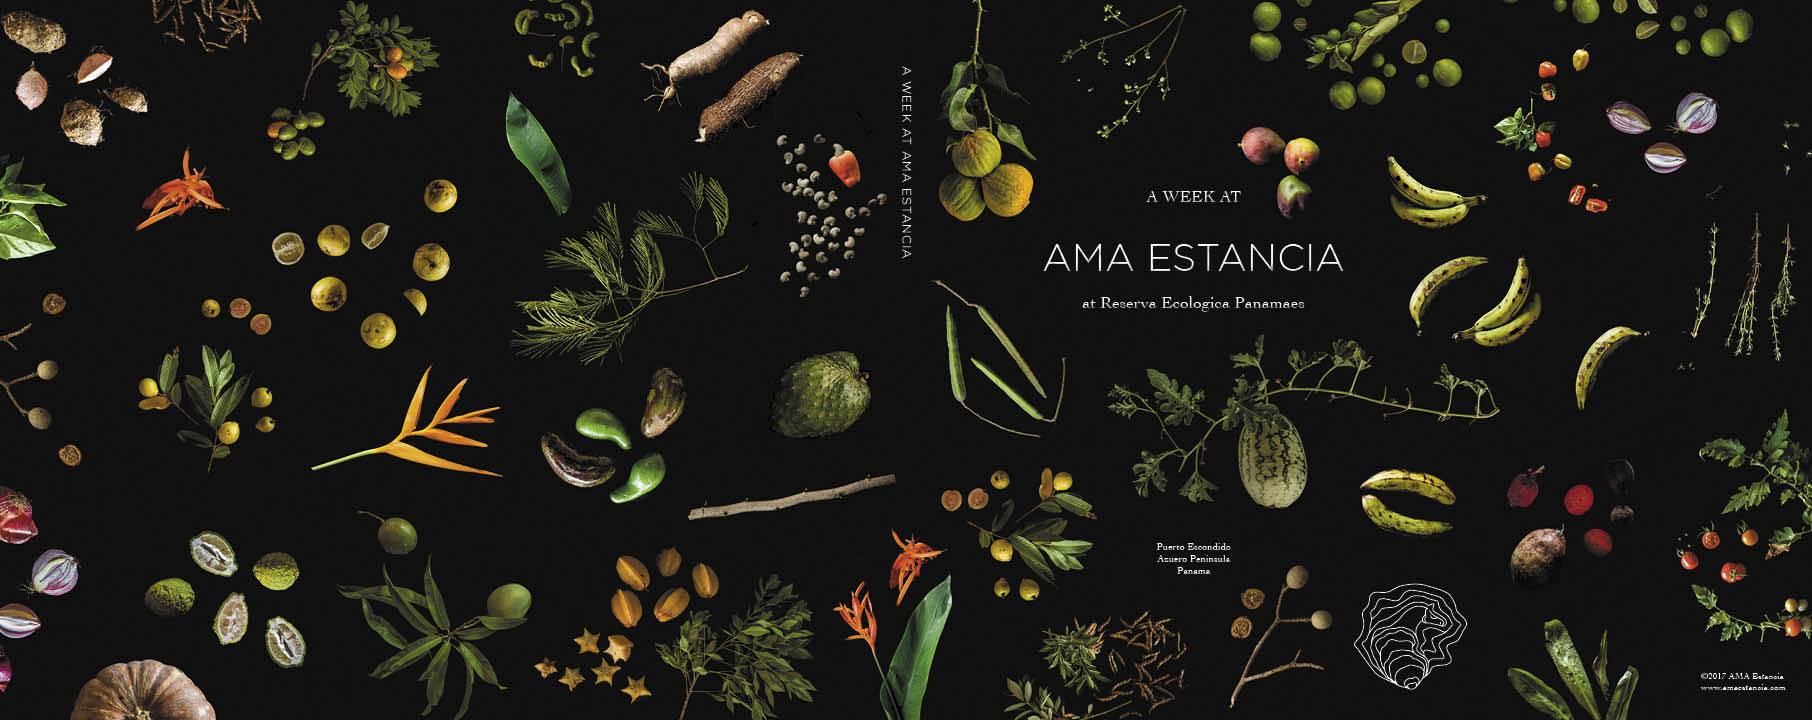 AMA Estancia Cookbook 